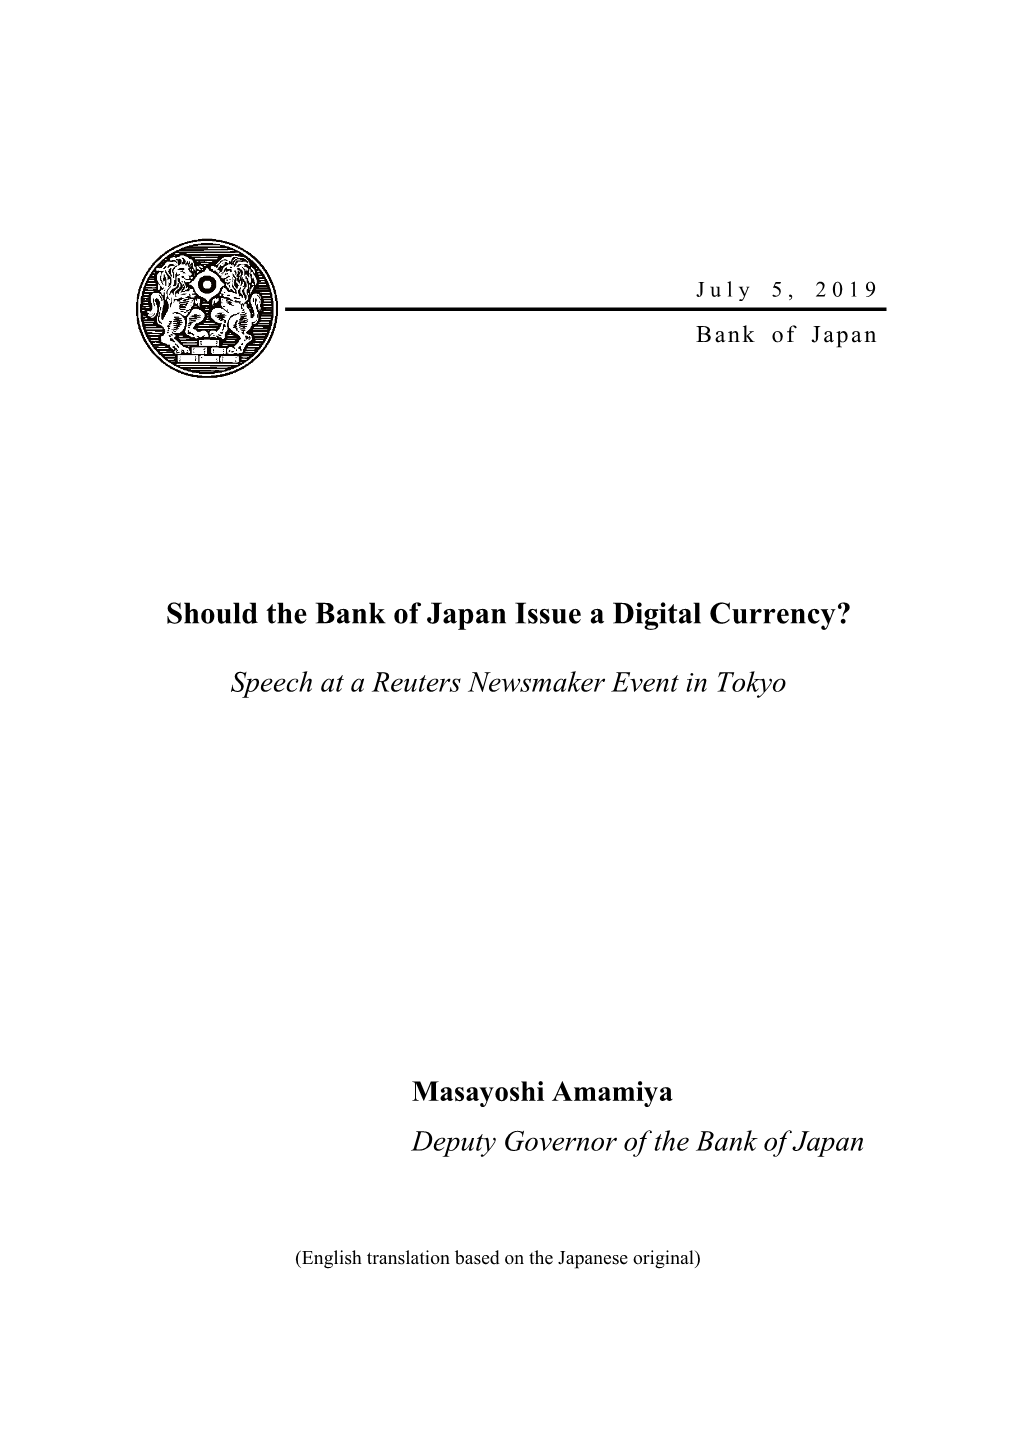 Masayoshi Amamiya: Should the Bank of Japan Issue a Digital Currency?